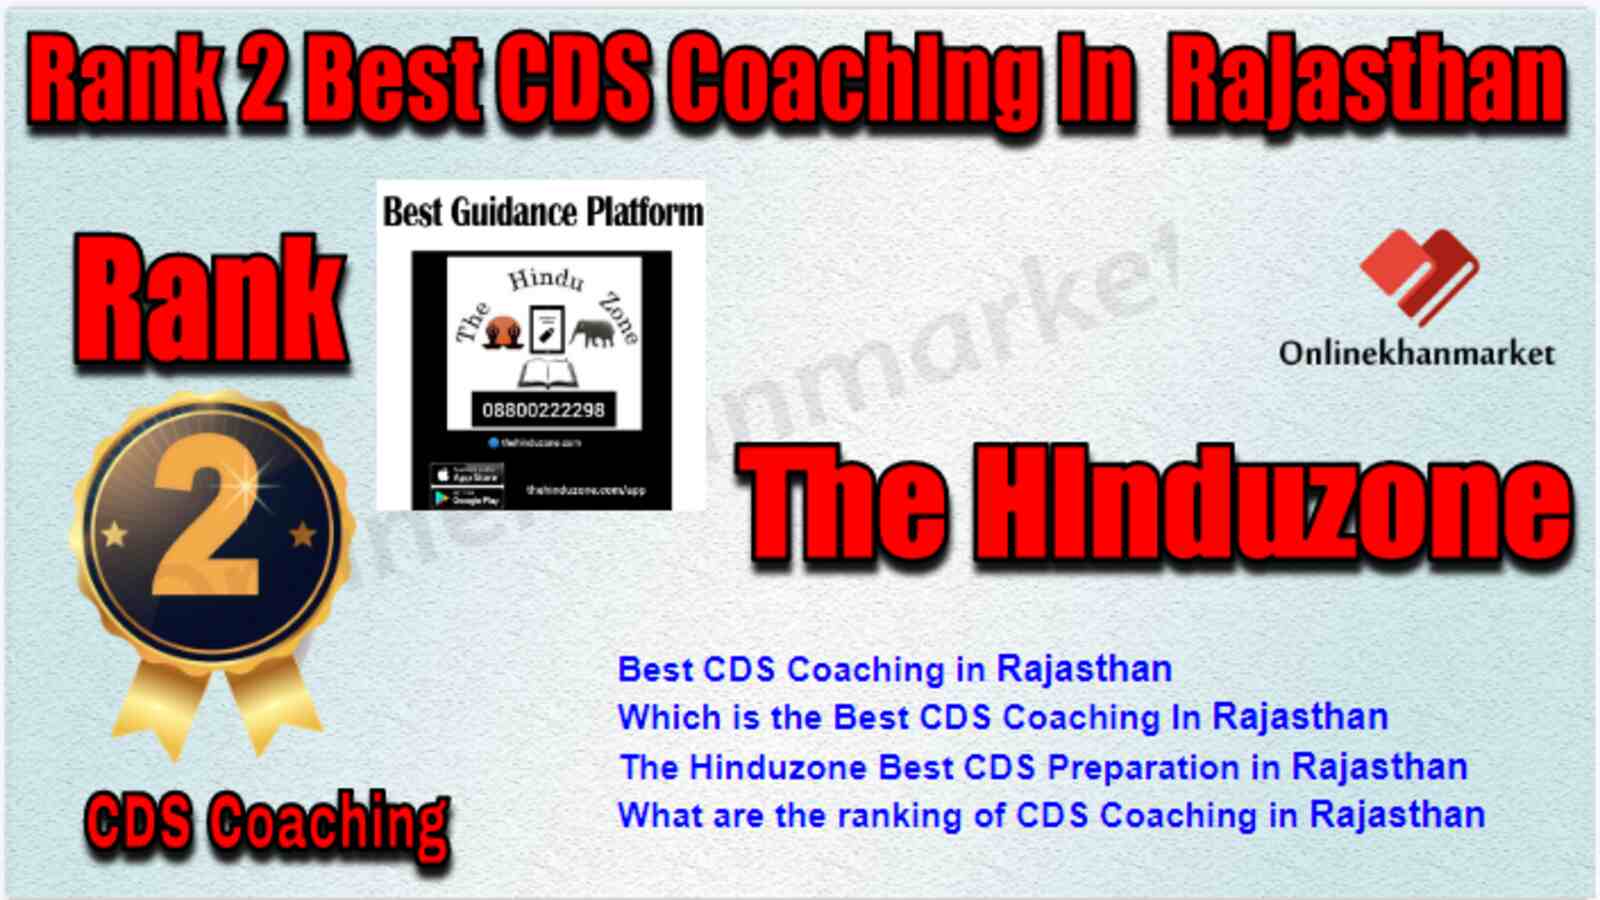 Rank 2 Best CDS Coaching in Rajasthan